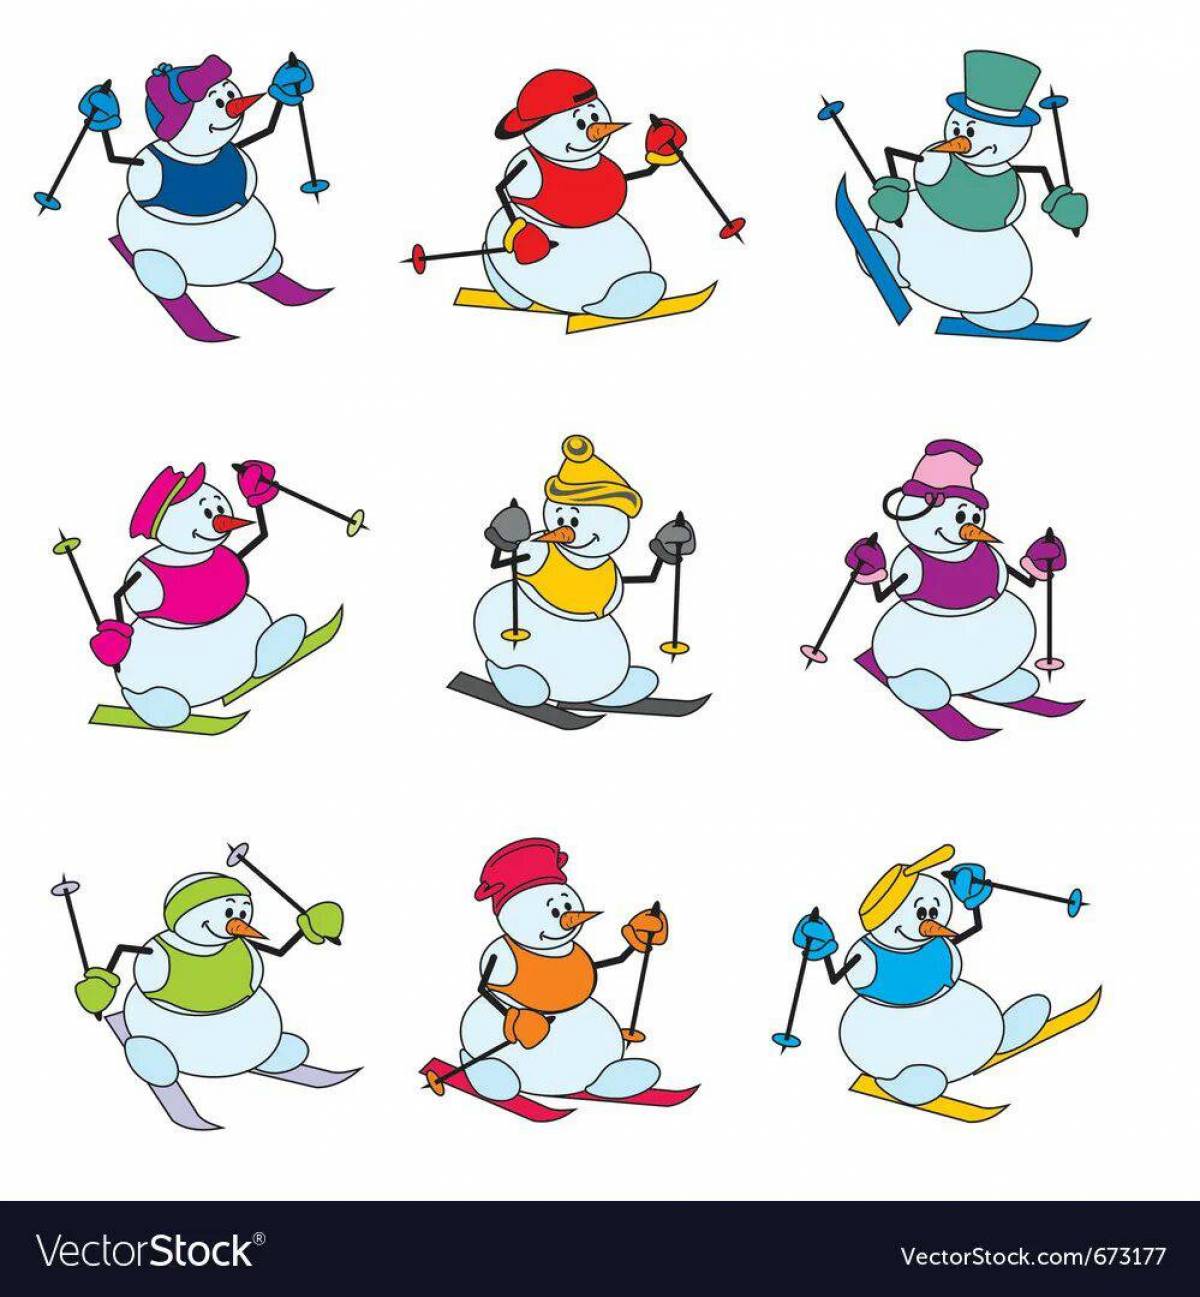 Снеговик на лыжах #15